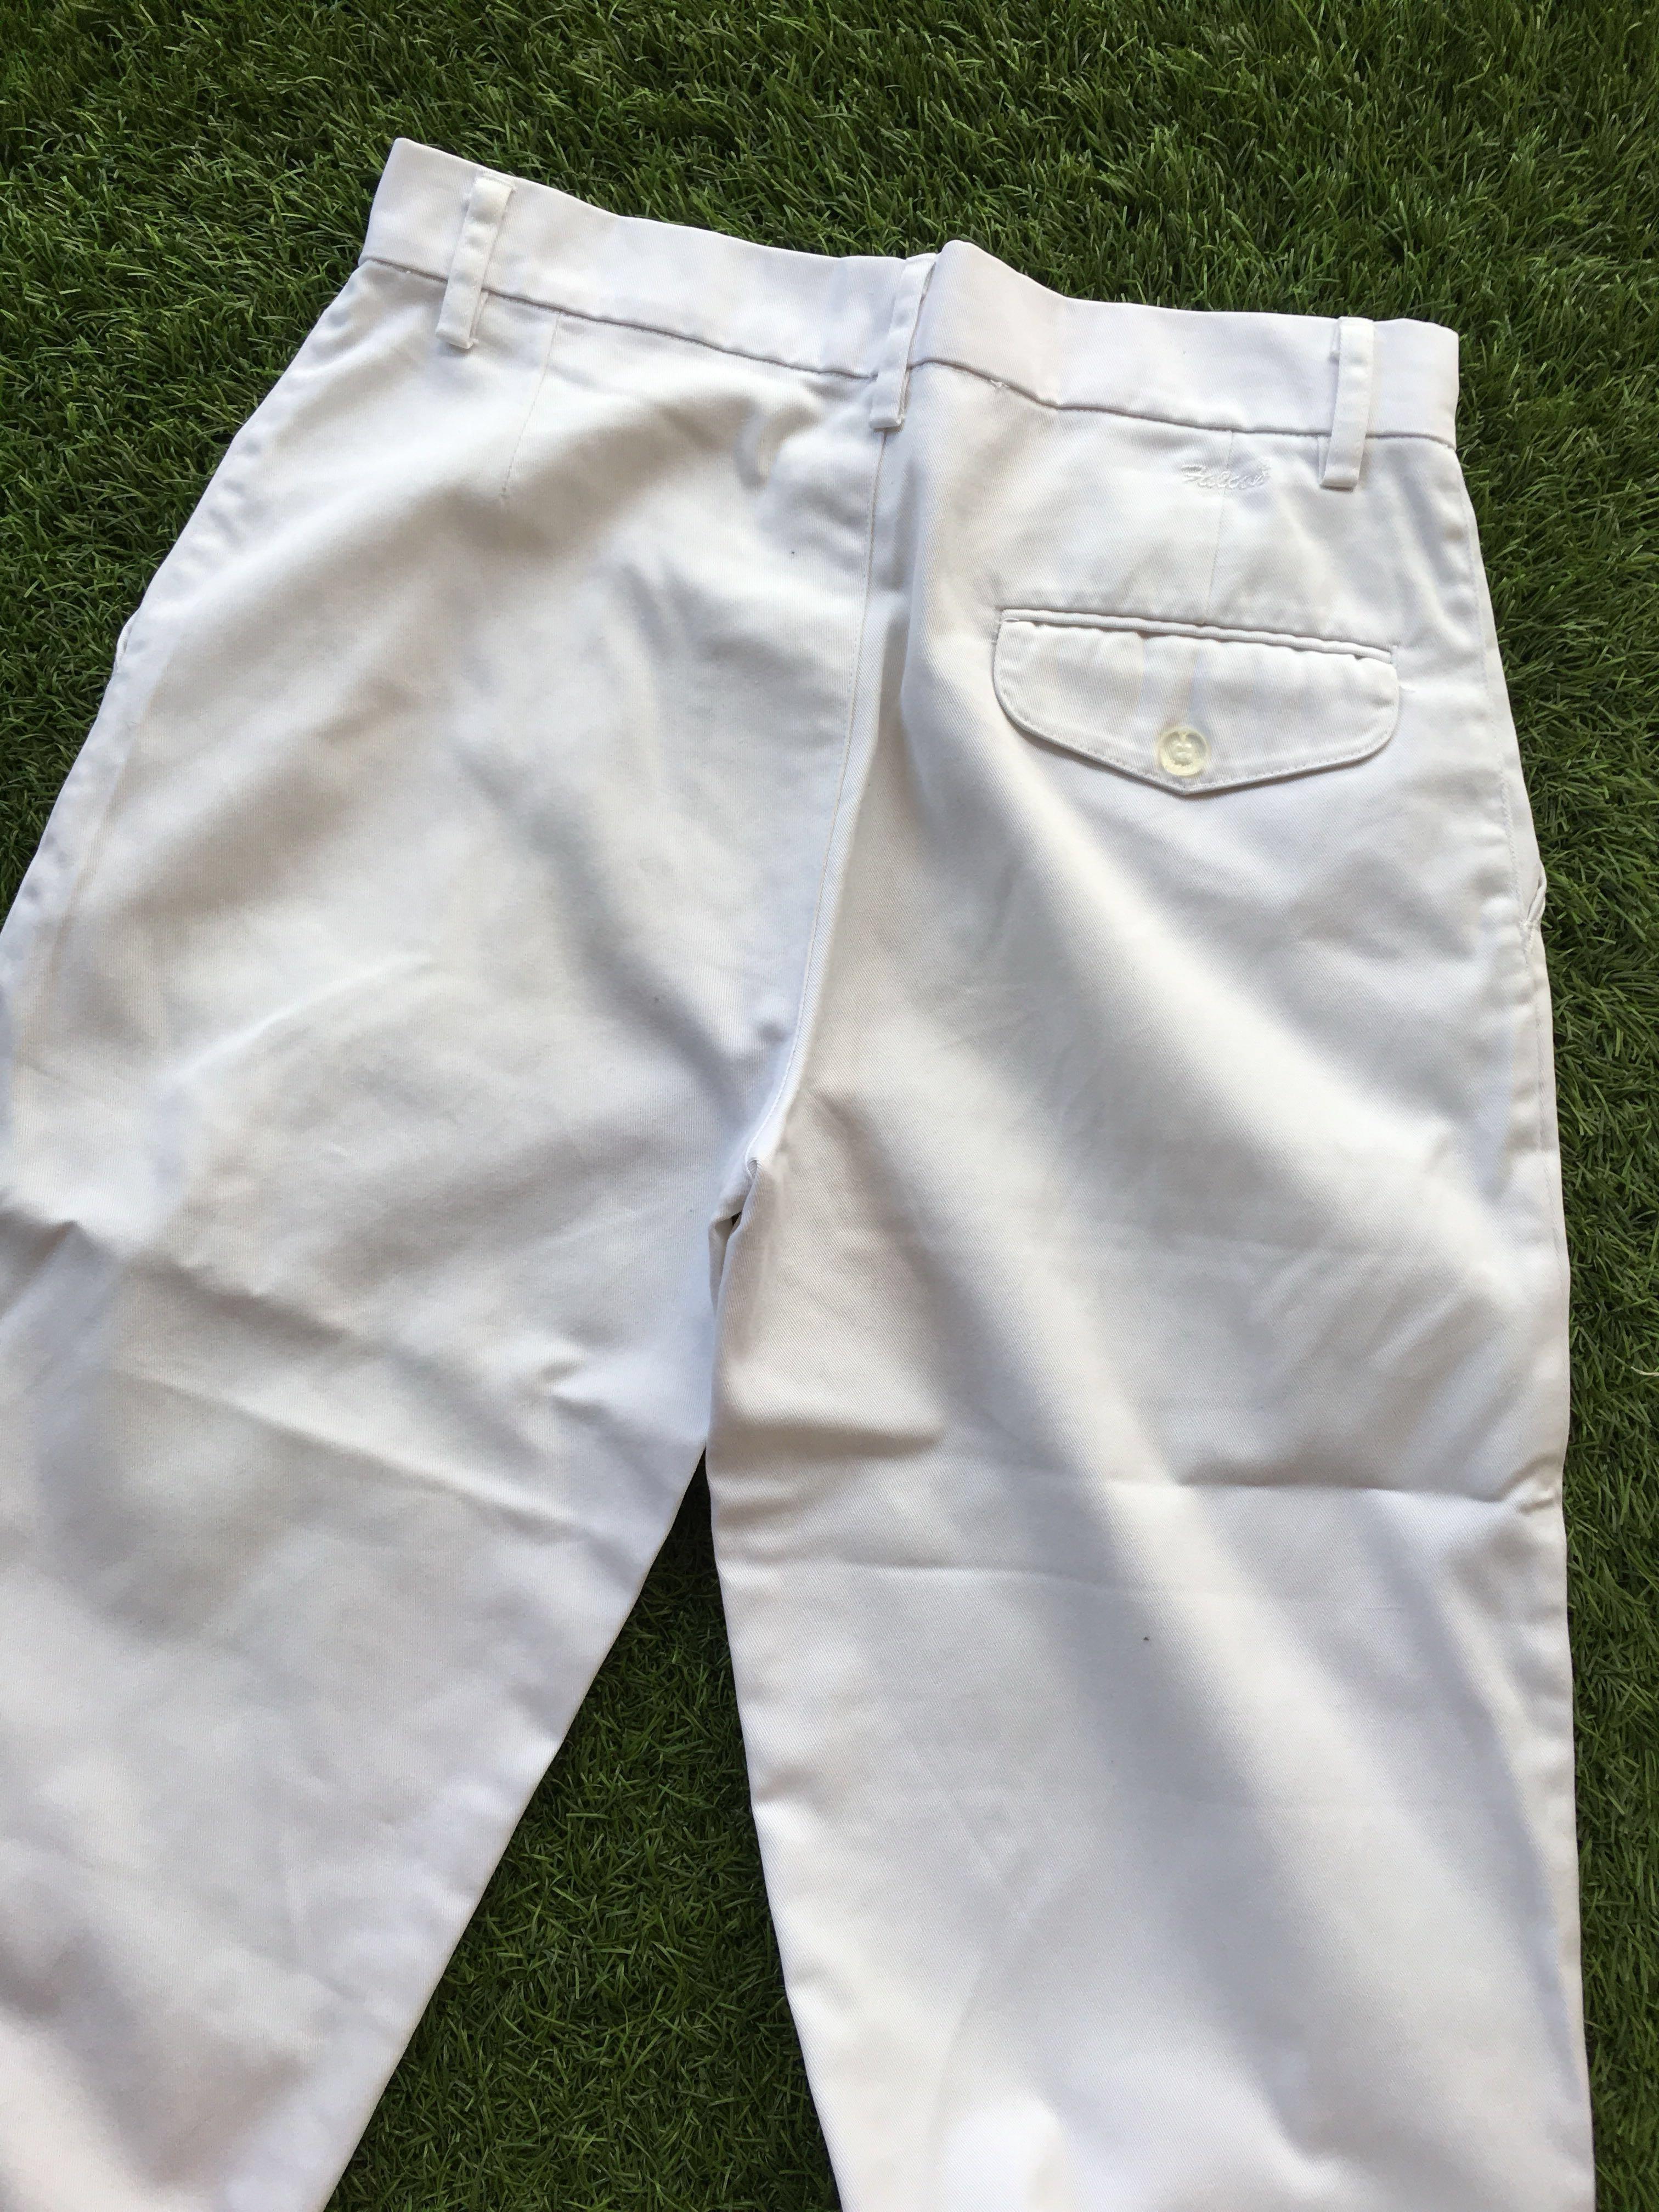 PBSM white pants (school uniform), Women's Fashion, Bottoms, Other ...